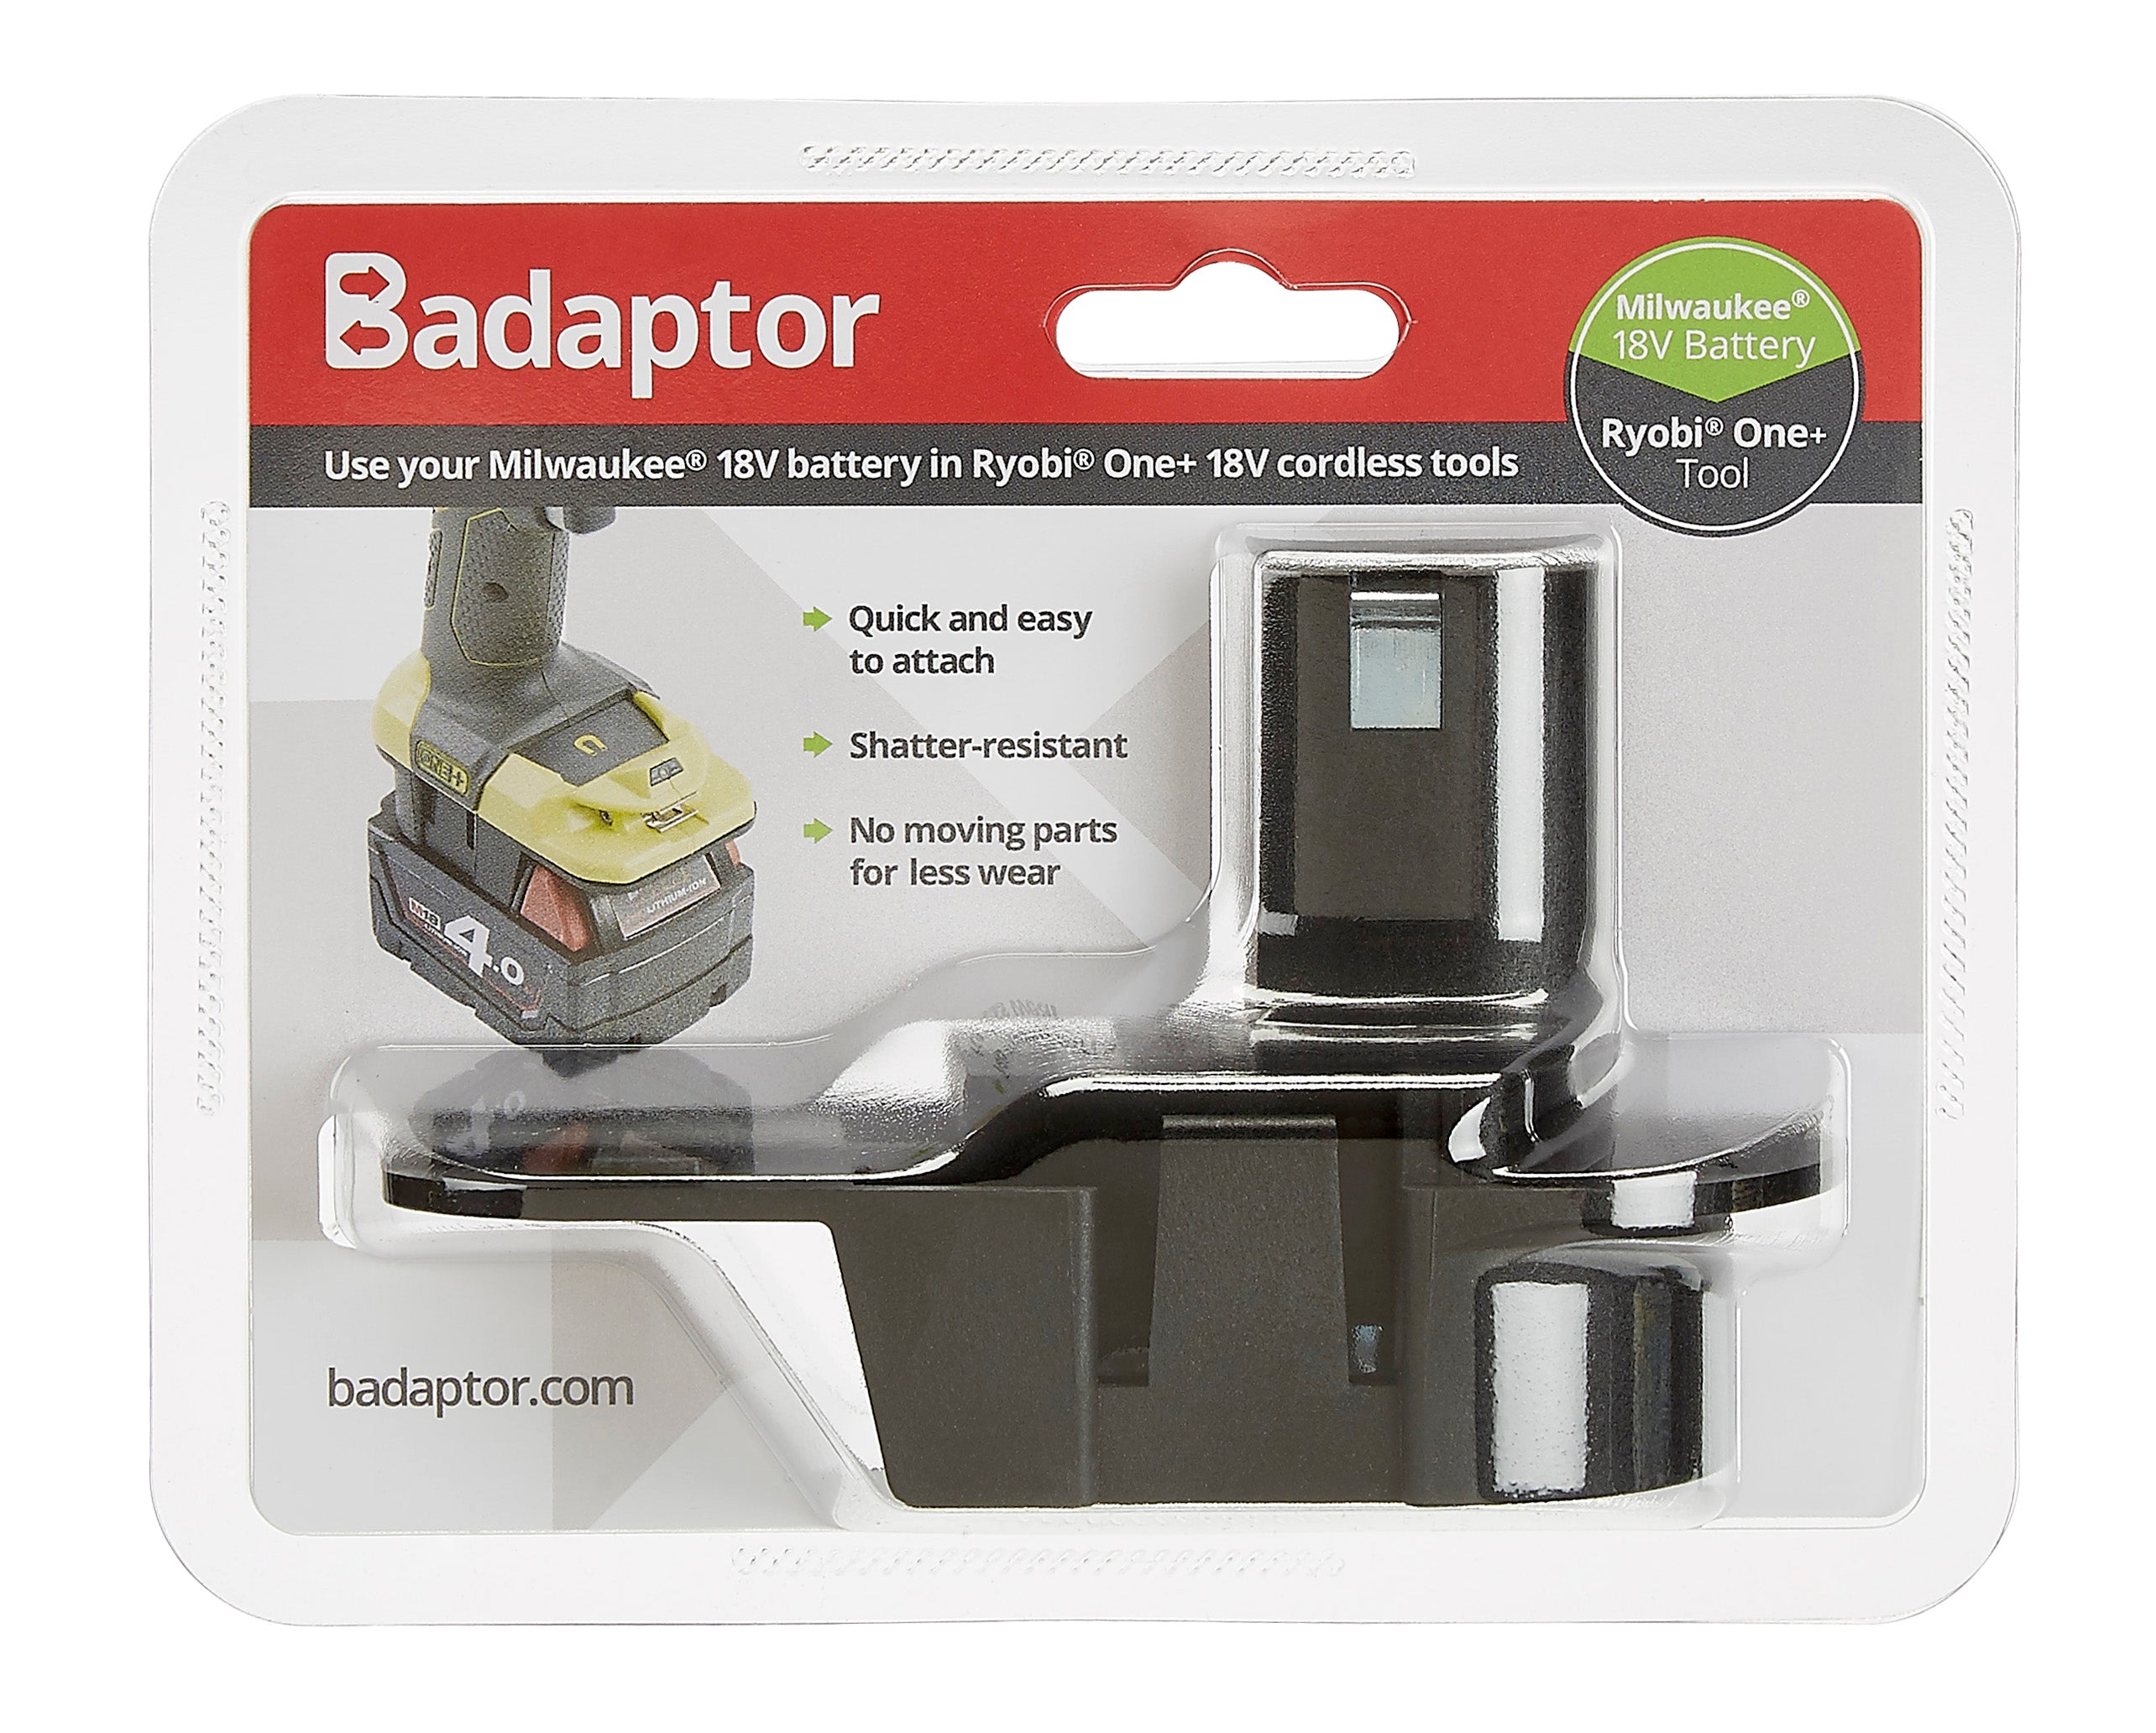 Badaptor Milwaukee Battery Adapter to Ryobi 18v One+ Works with Ryobi 18v One+ Tool for Btec 808-12